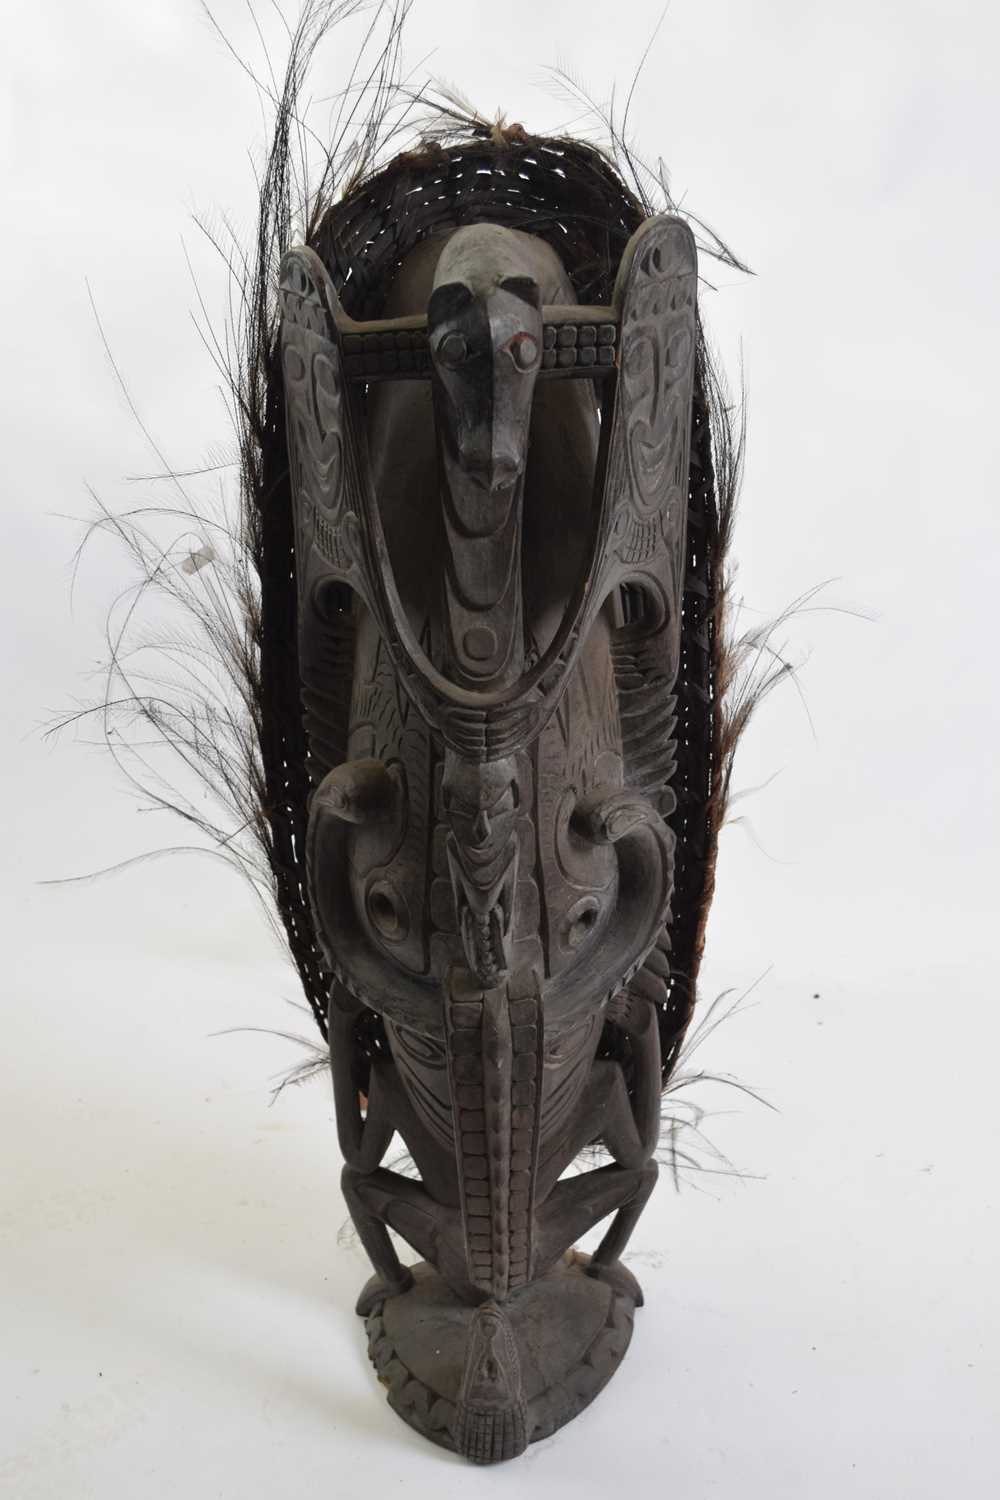 Tribal/ethnographica interest - Papua New Guinea mask of hybrid anthopomorphic and animal form set